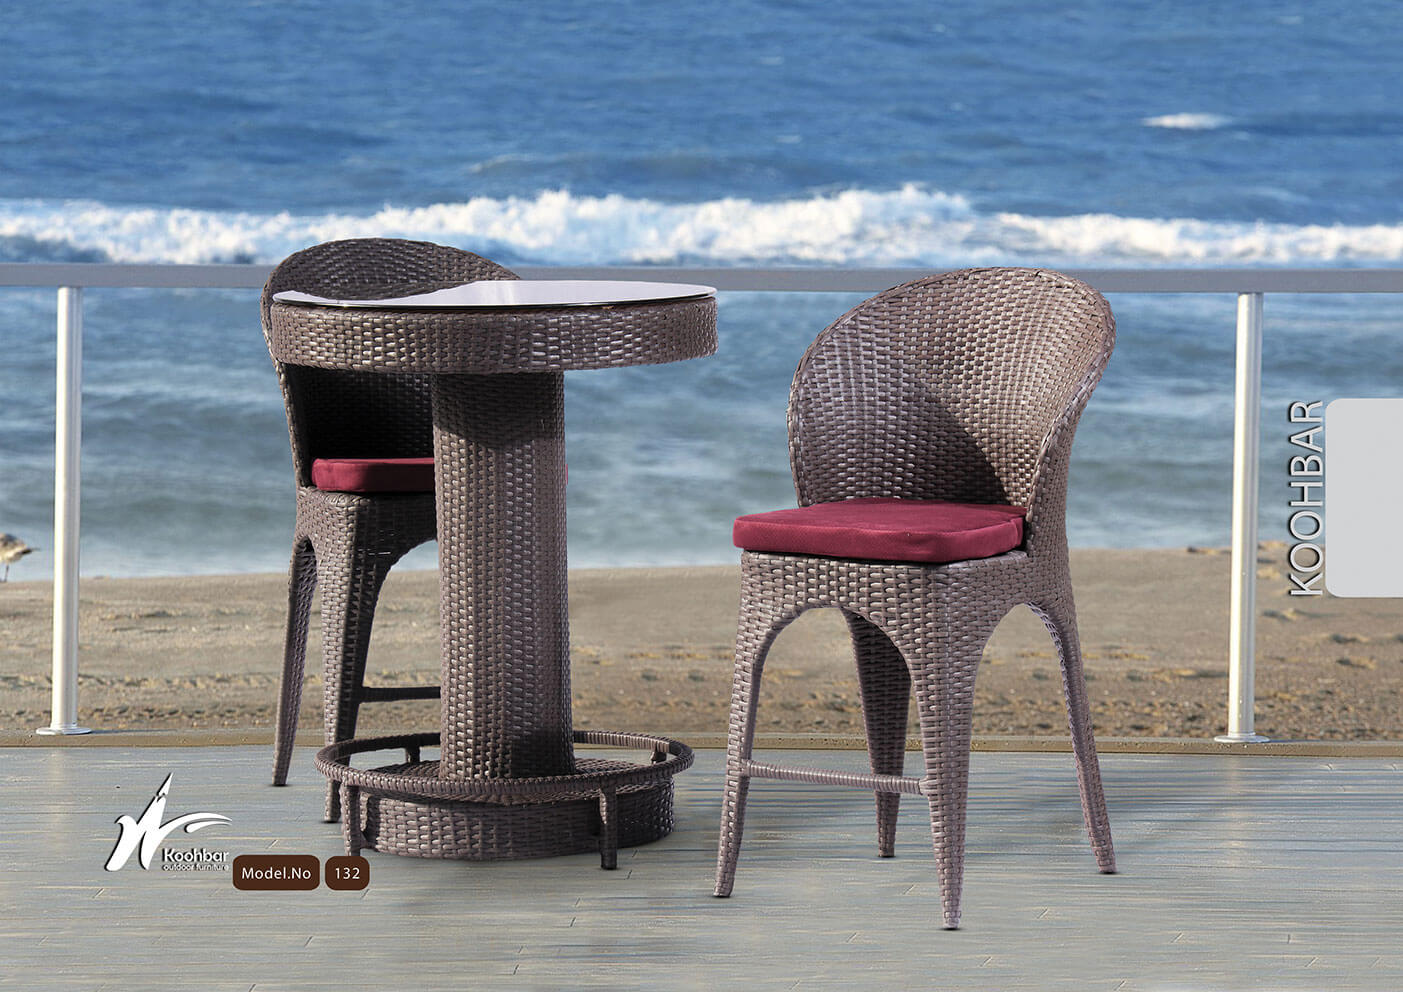 kohbar patio conversation sets 132 model0 - ست میز صندلی صبحانه خوری کوهبر مدل ۱۳۲ -  - patio-bar-furniture